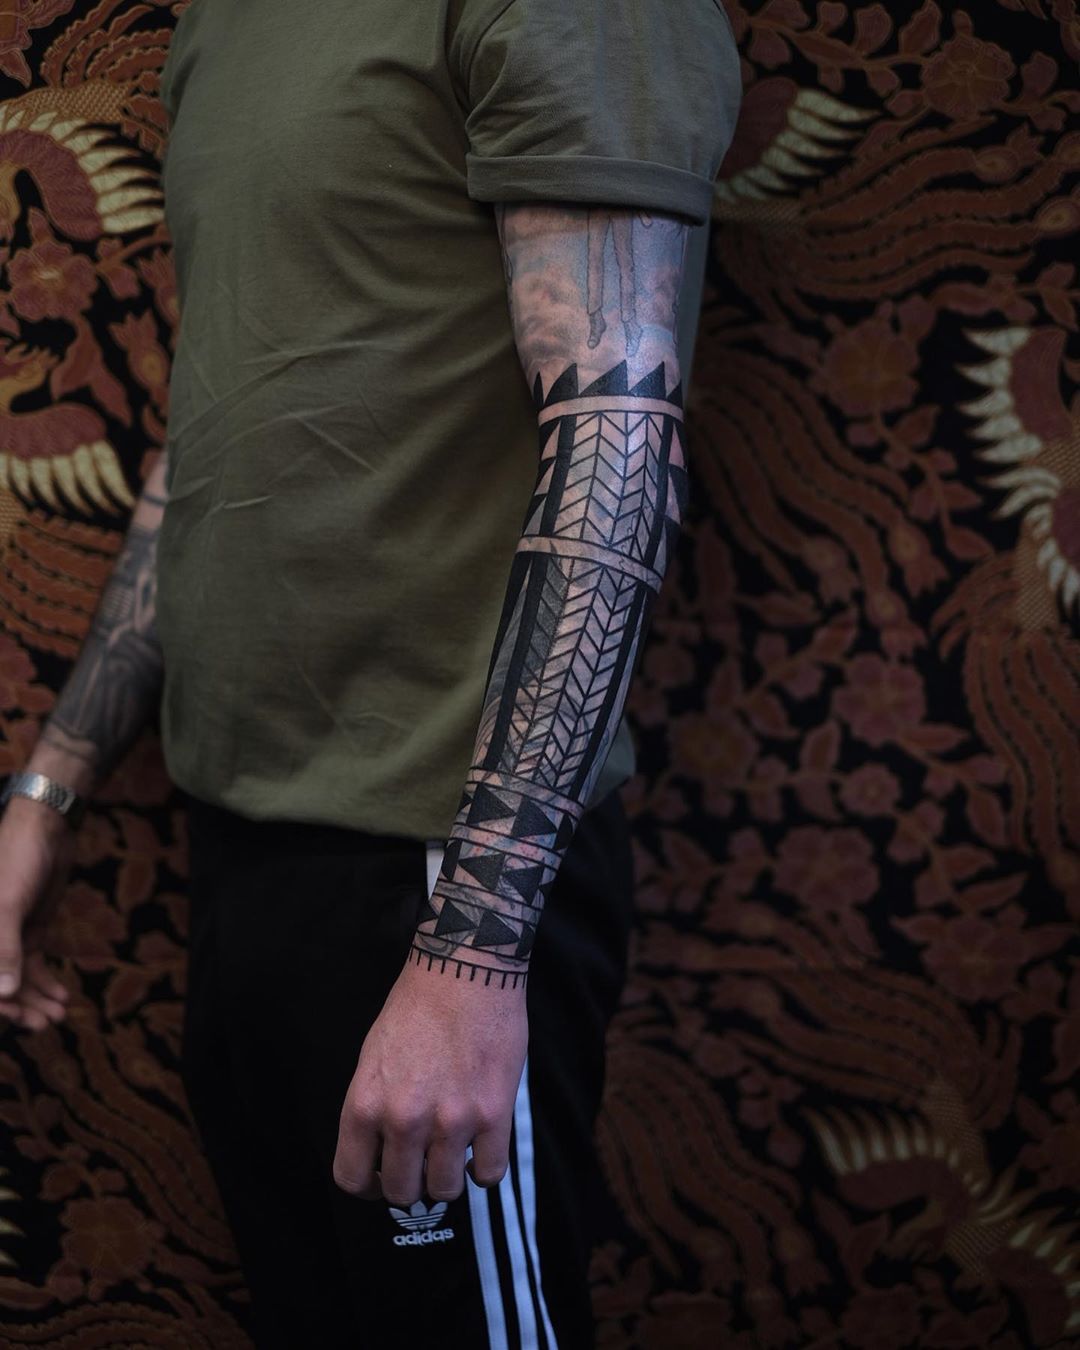 Foreversadaustin tattoos  Healed blastover Ed Hardy inspired Done at  truenorthtattoo healedtattoo blastovertattoo truenorthtattoo ygk  ygktattoo kingstontattoo  Facebook